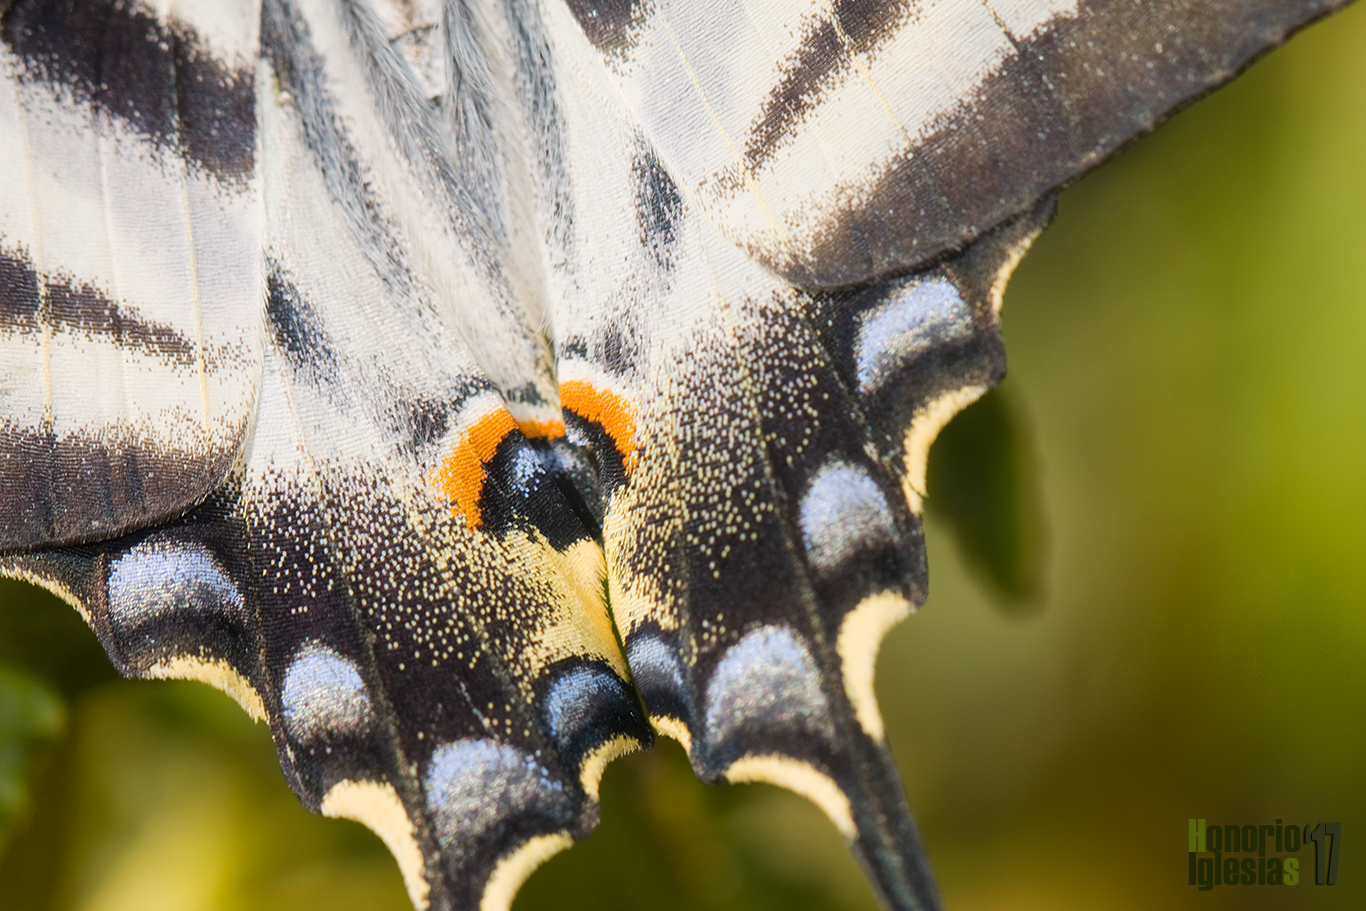 Detalle de los ocelos de un ejemplar de mariposa chupaleches o chupaleche (Iphiclides feisthamelii).